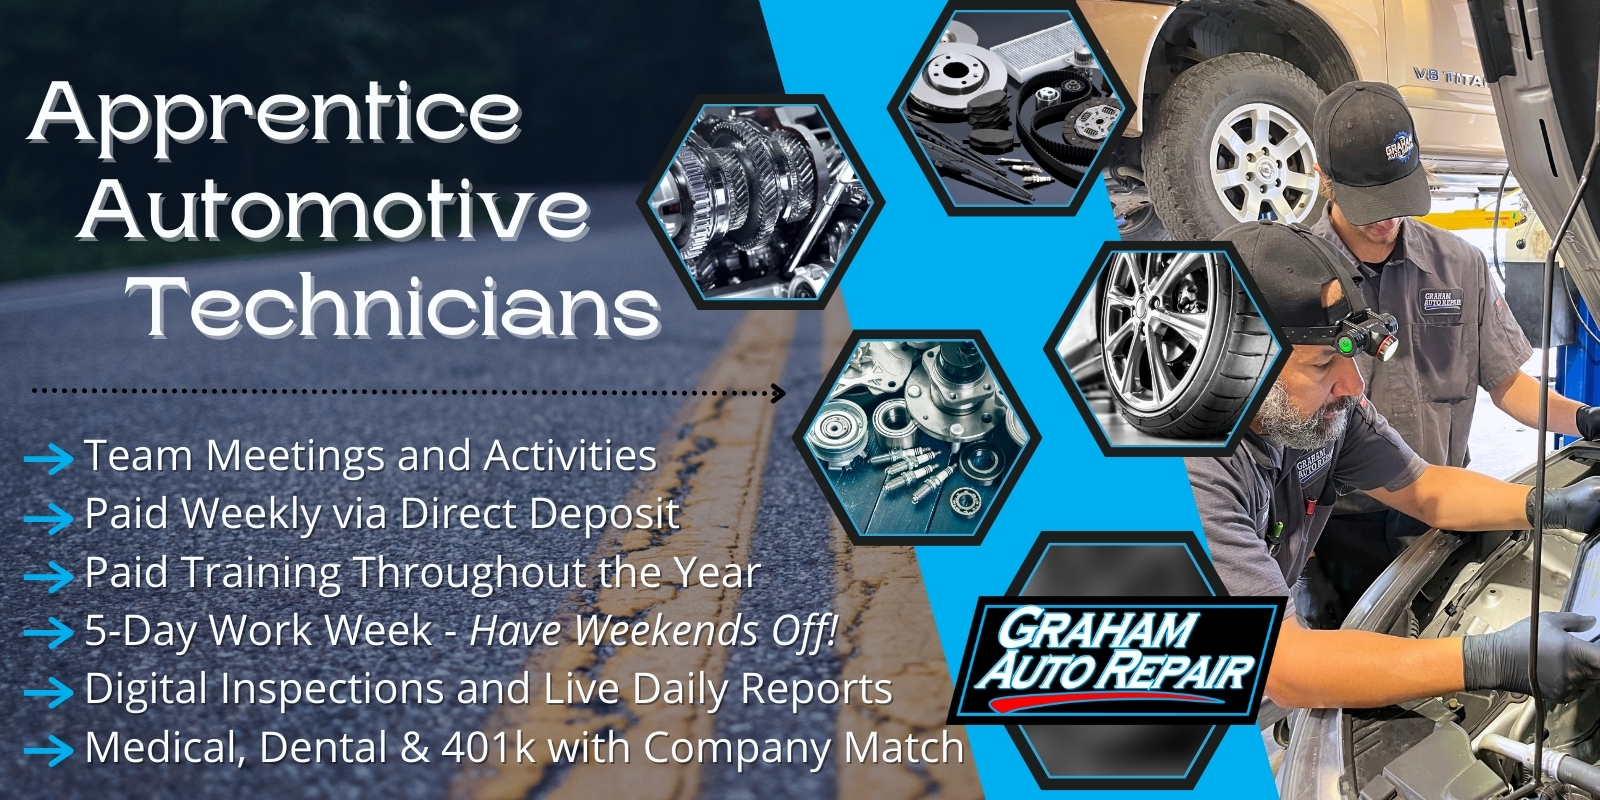 Apprentice Technician Job at Graham Auto Repair